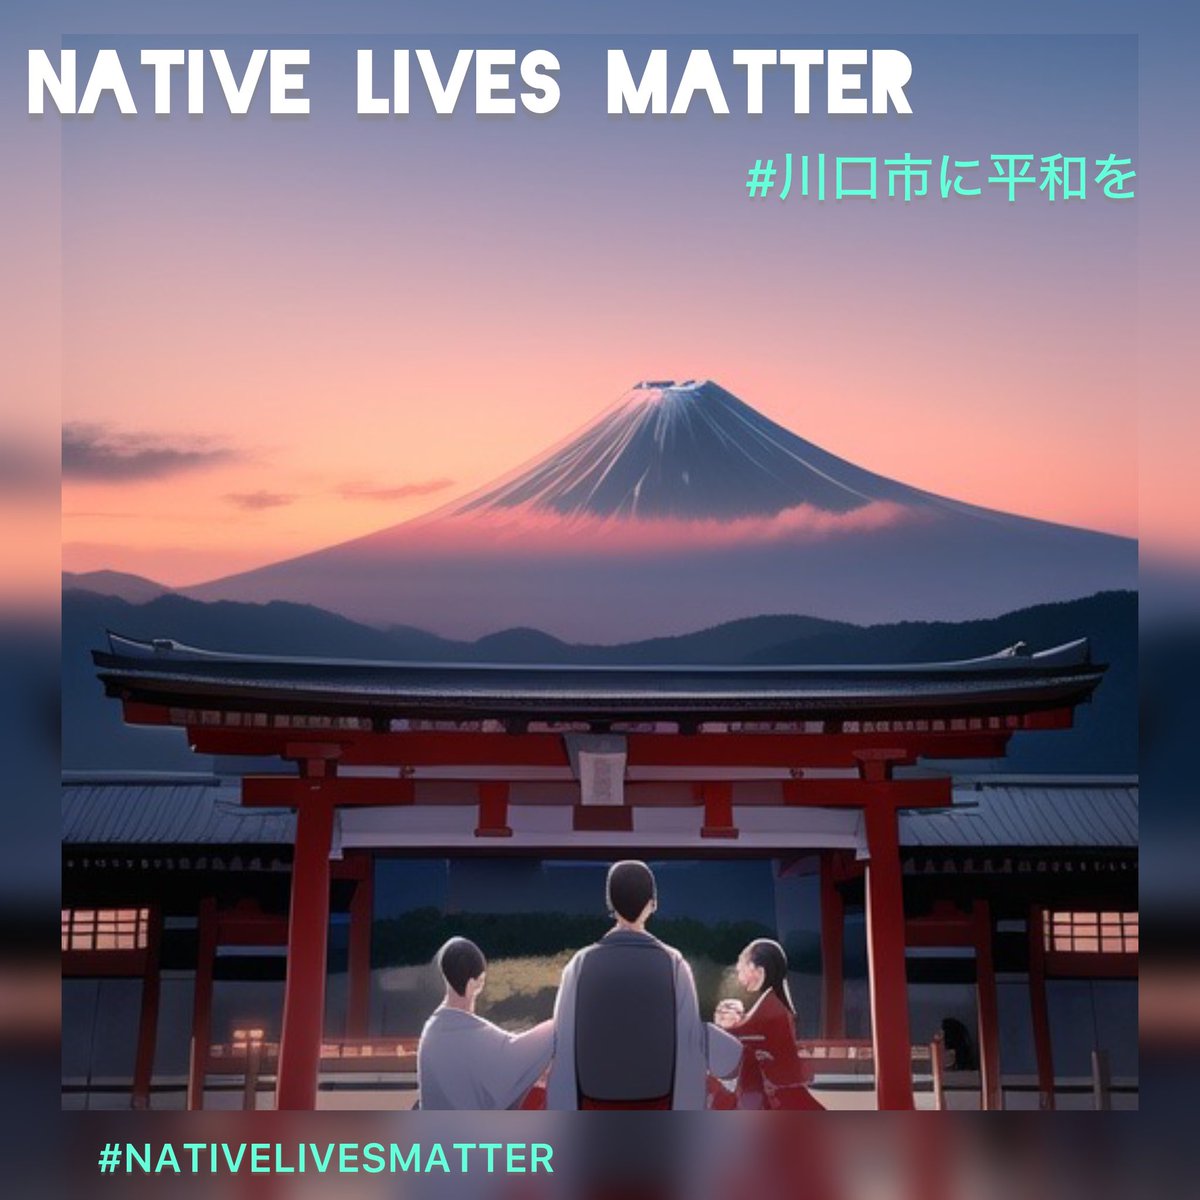 Version 2
どうぞご自由に☺️

#NATIVELIVESMATTER 
#JapaneseLivesMatter 
#川口に平和を
#私達の想いです